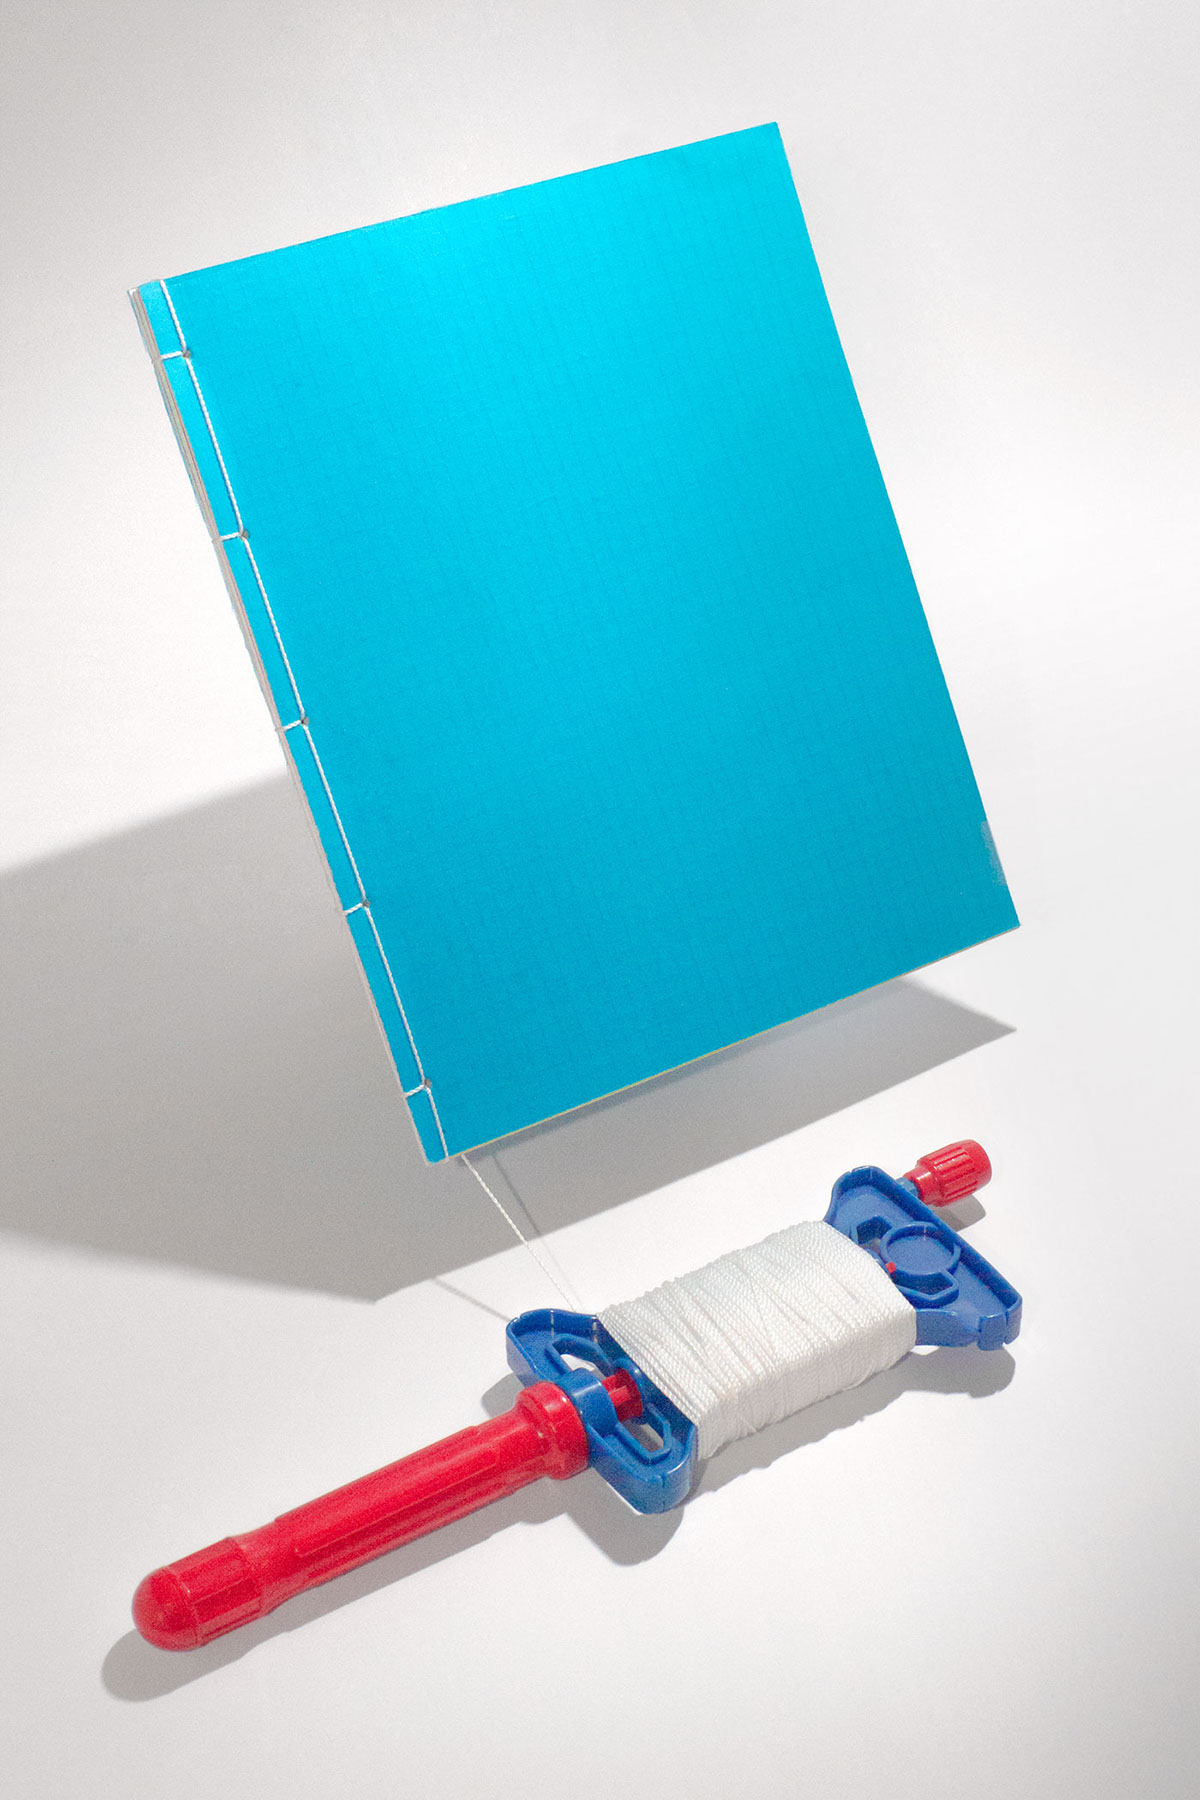 magazine fanzine cerfvolant art SKY edition colors Kite binding schoolproject homemade coolwork handmade